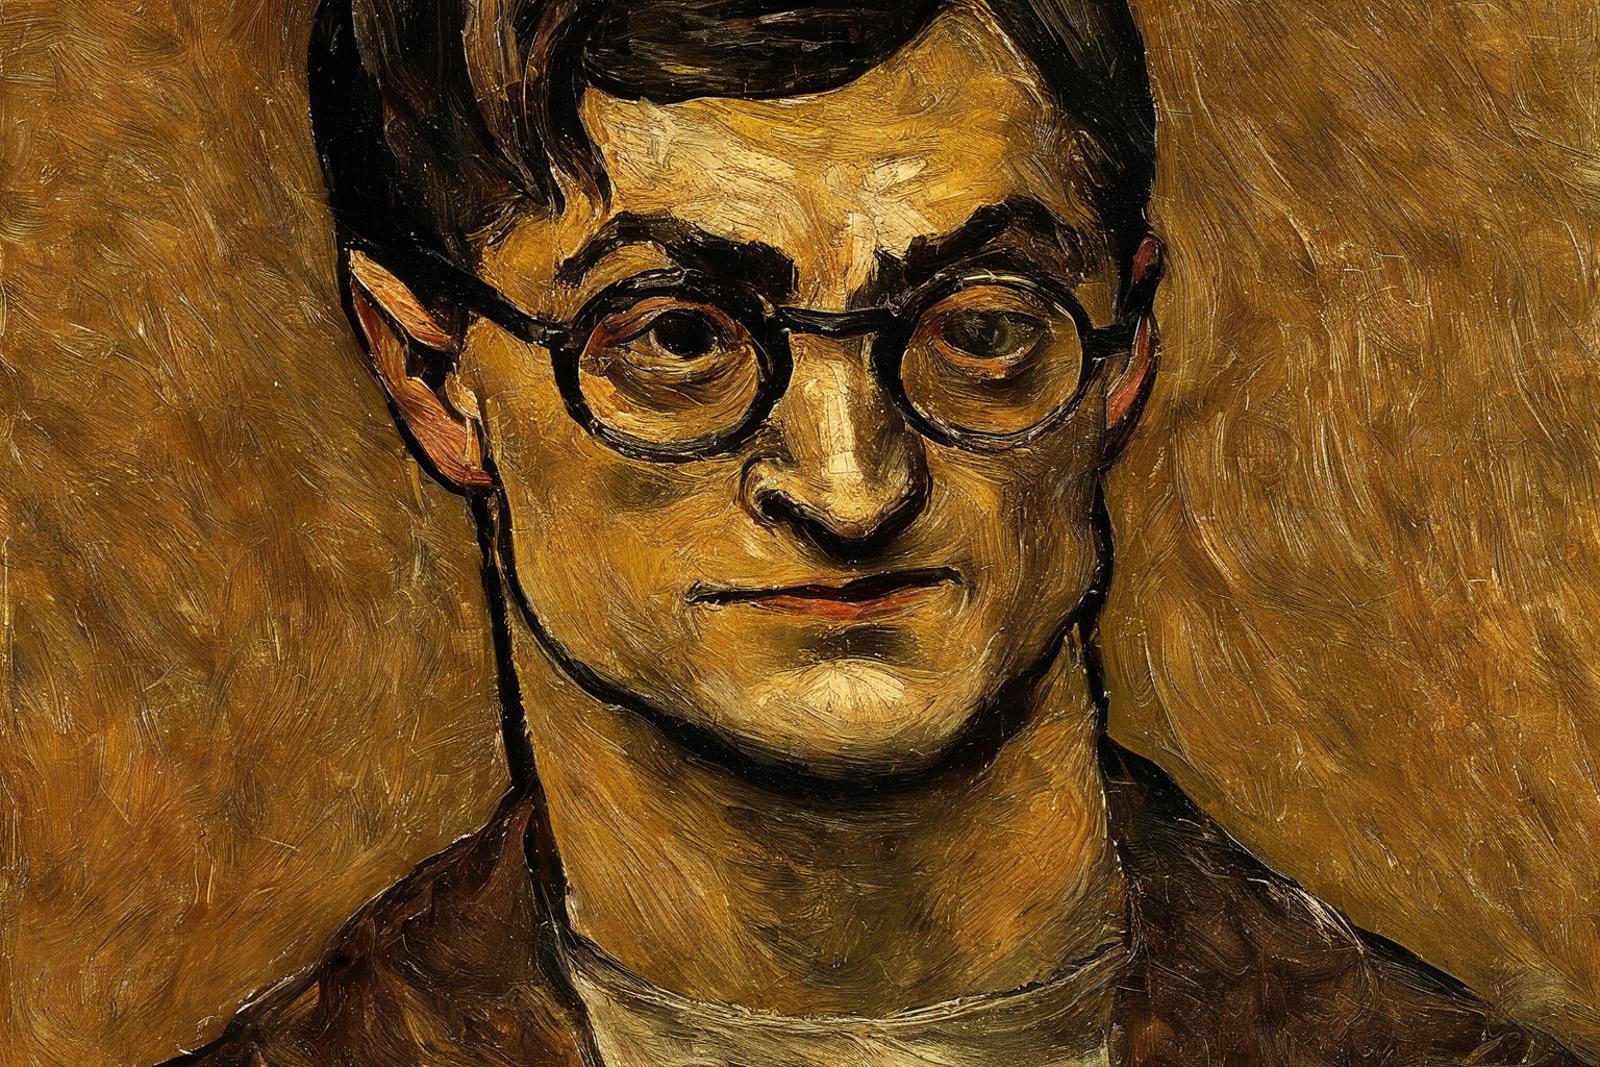 A portrait of a man wearing glasses.